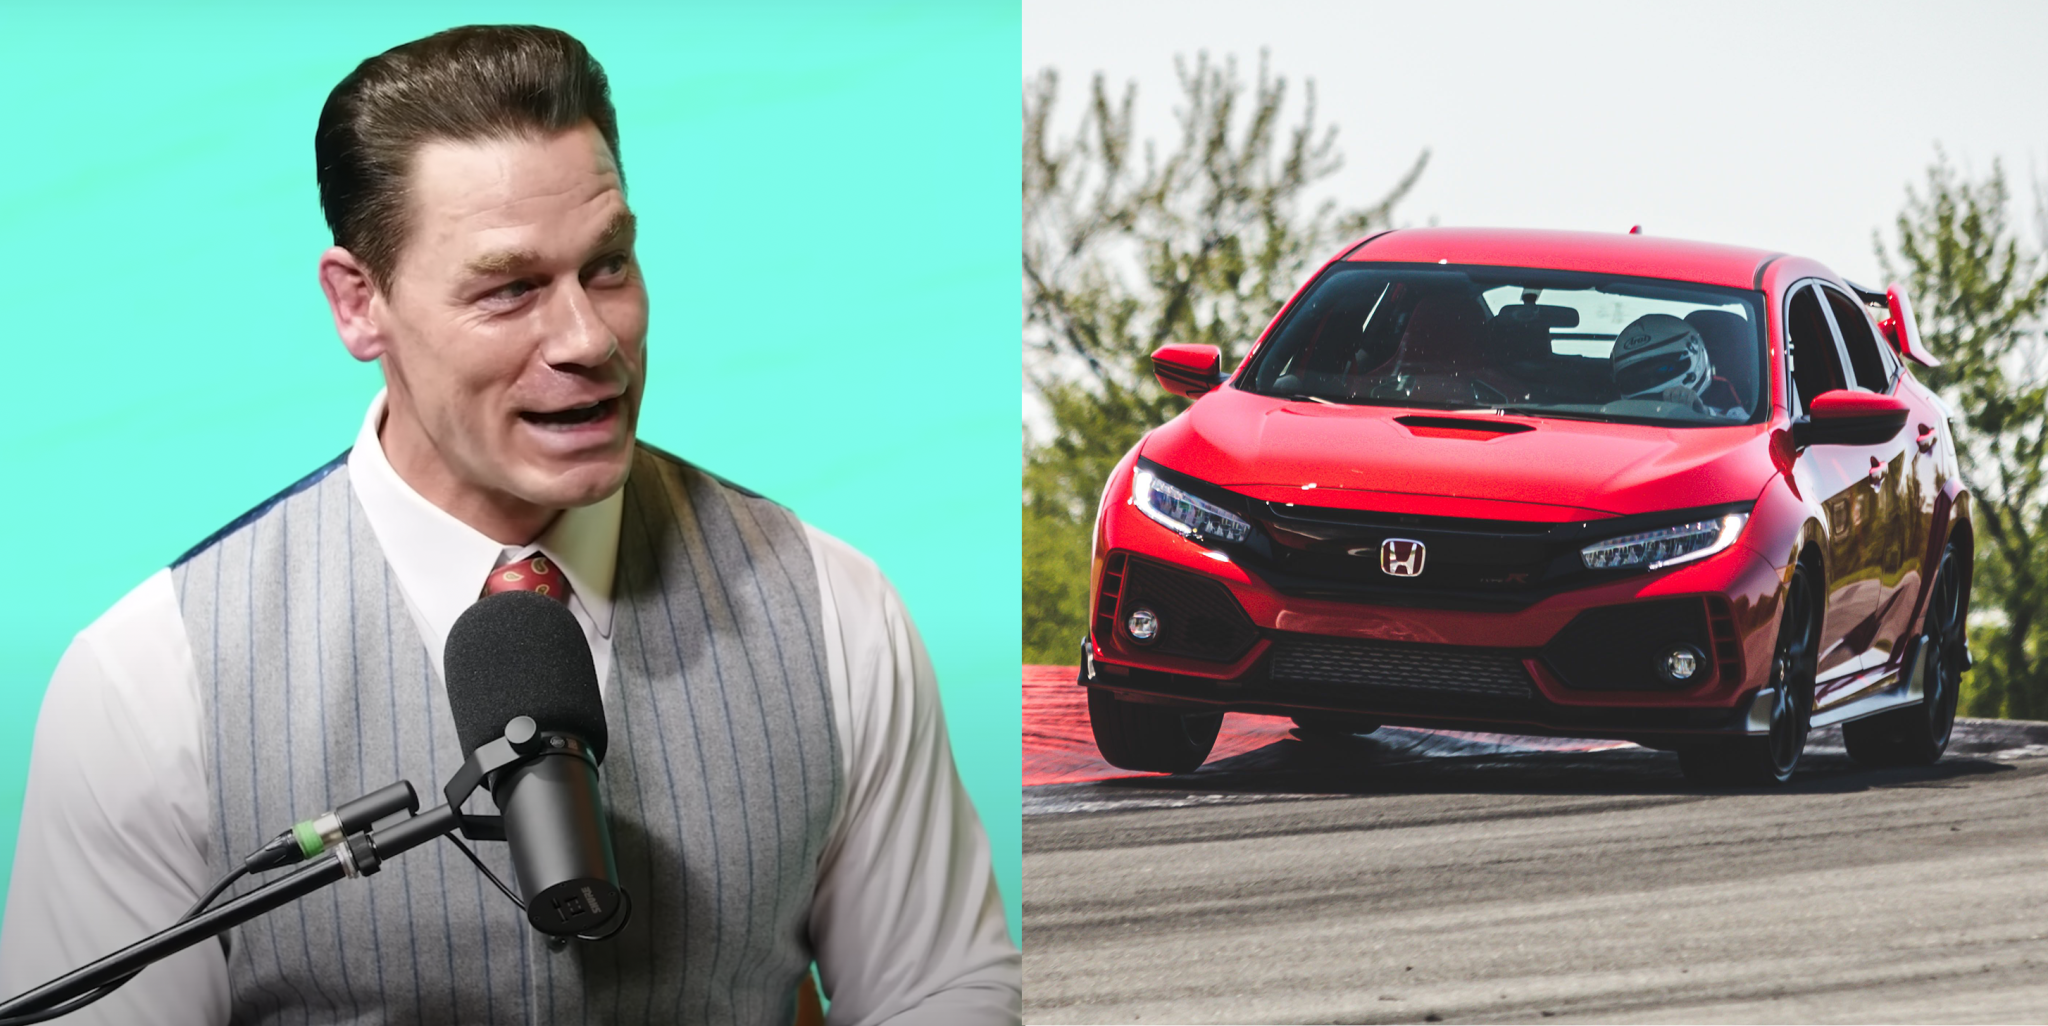 John Cena Reviews His Daily Driver: "It's got tech, it's manual, it's reliable"